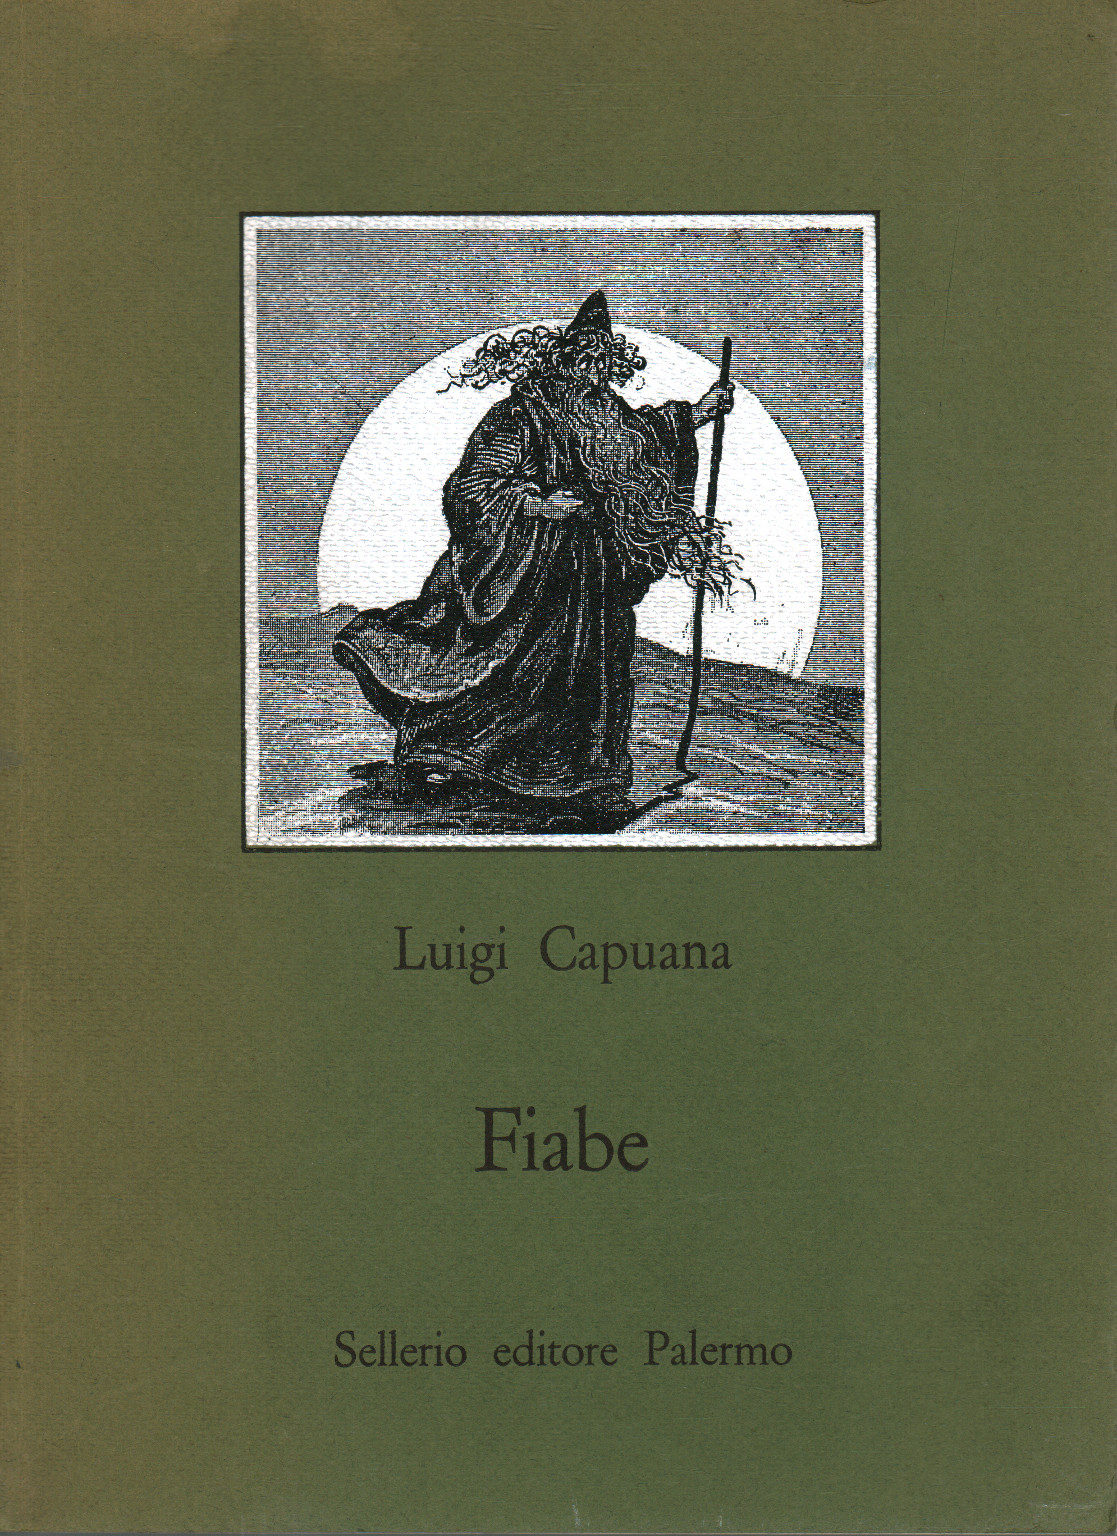 Fiabe, Luigi Capuana